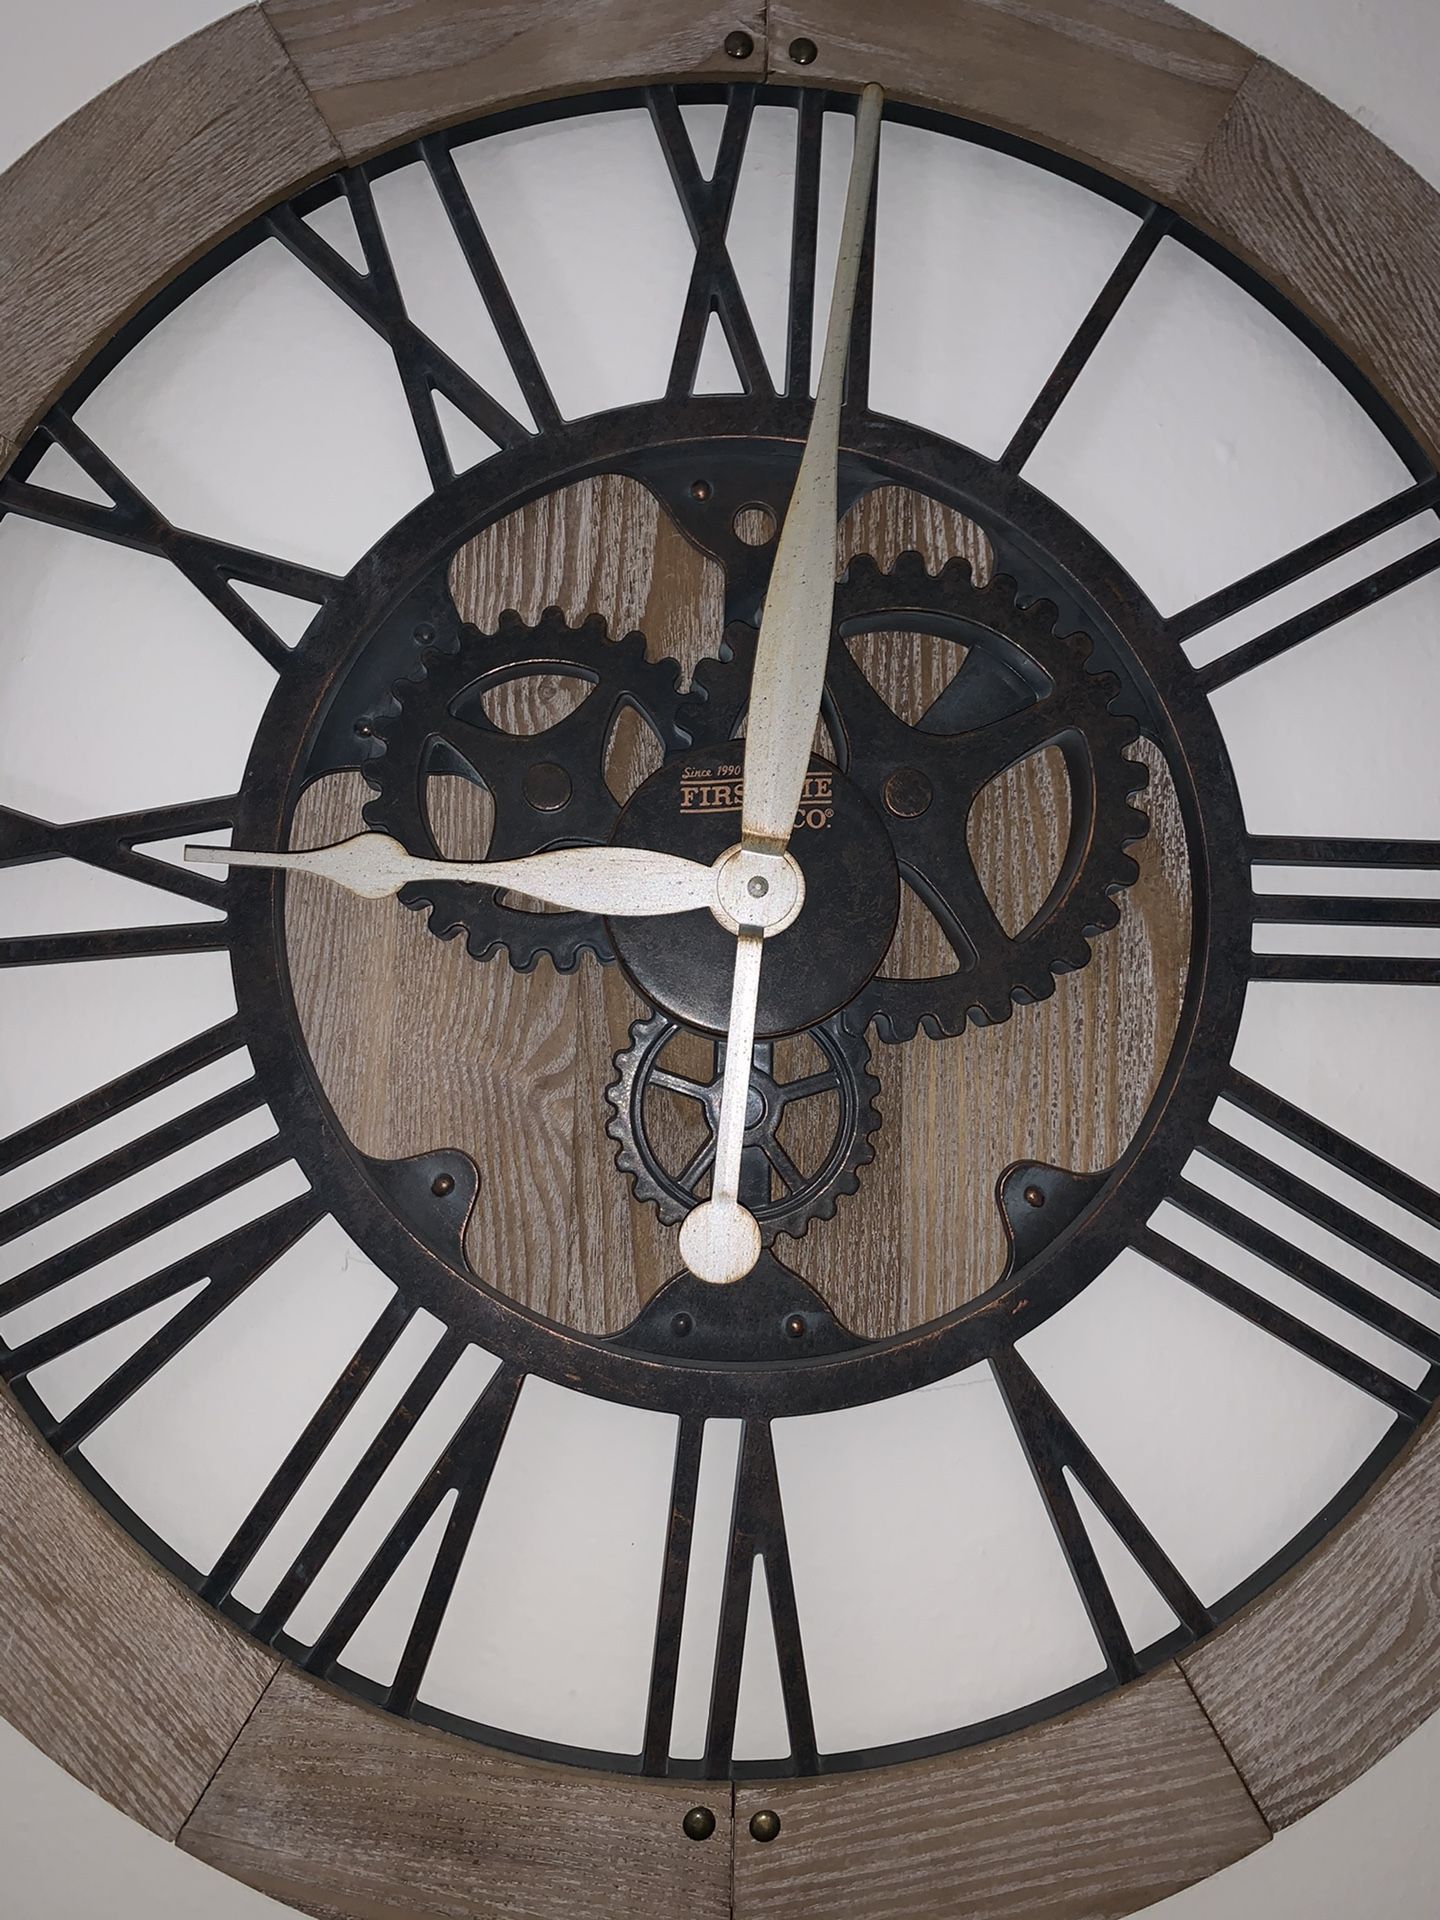 24” farmhouse rustic wall clock